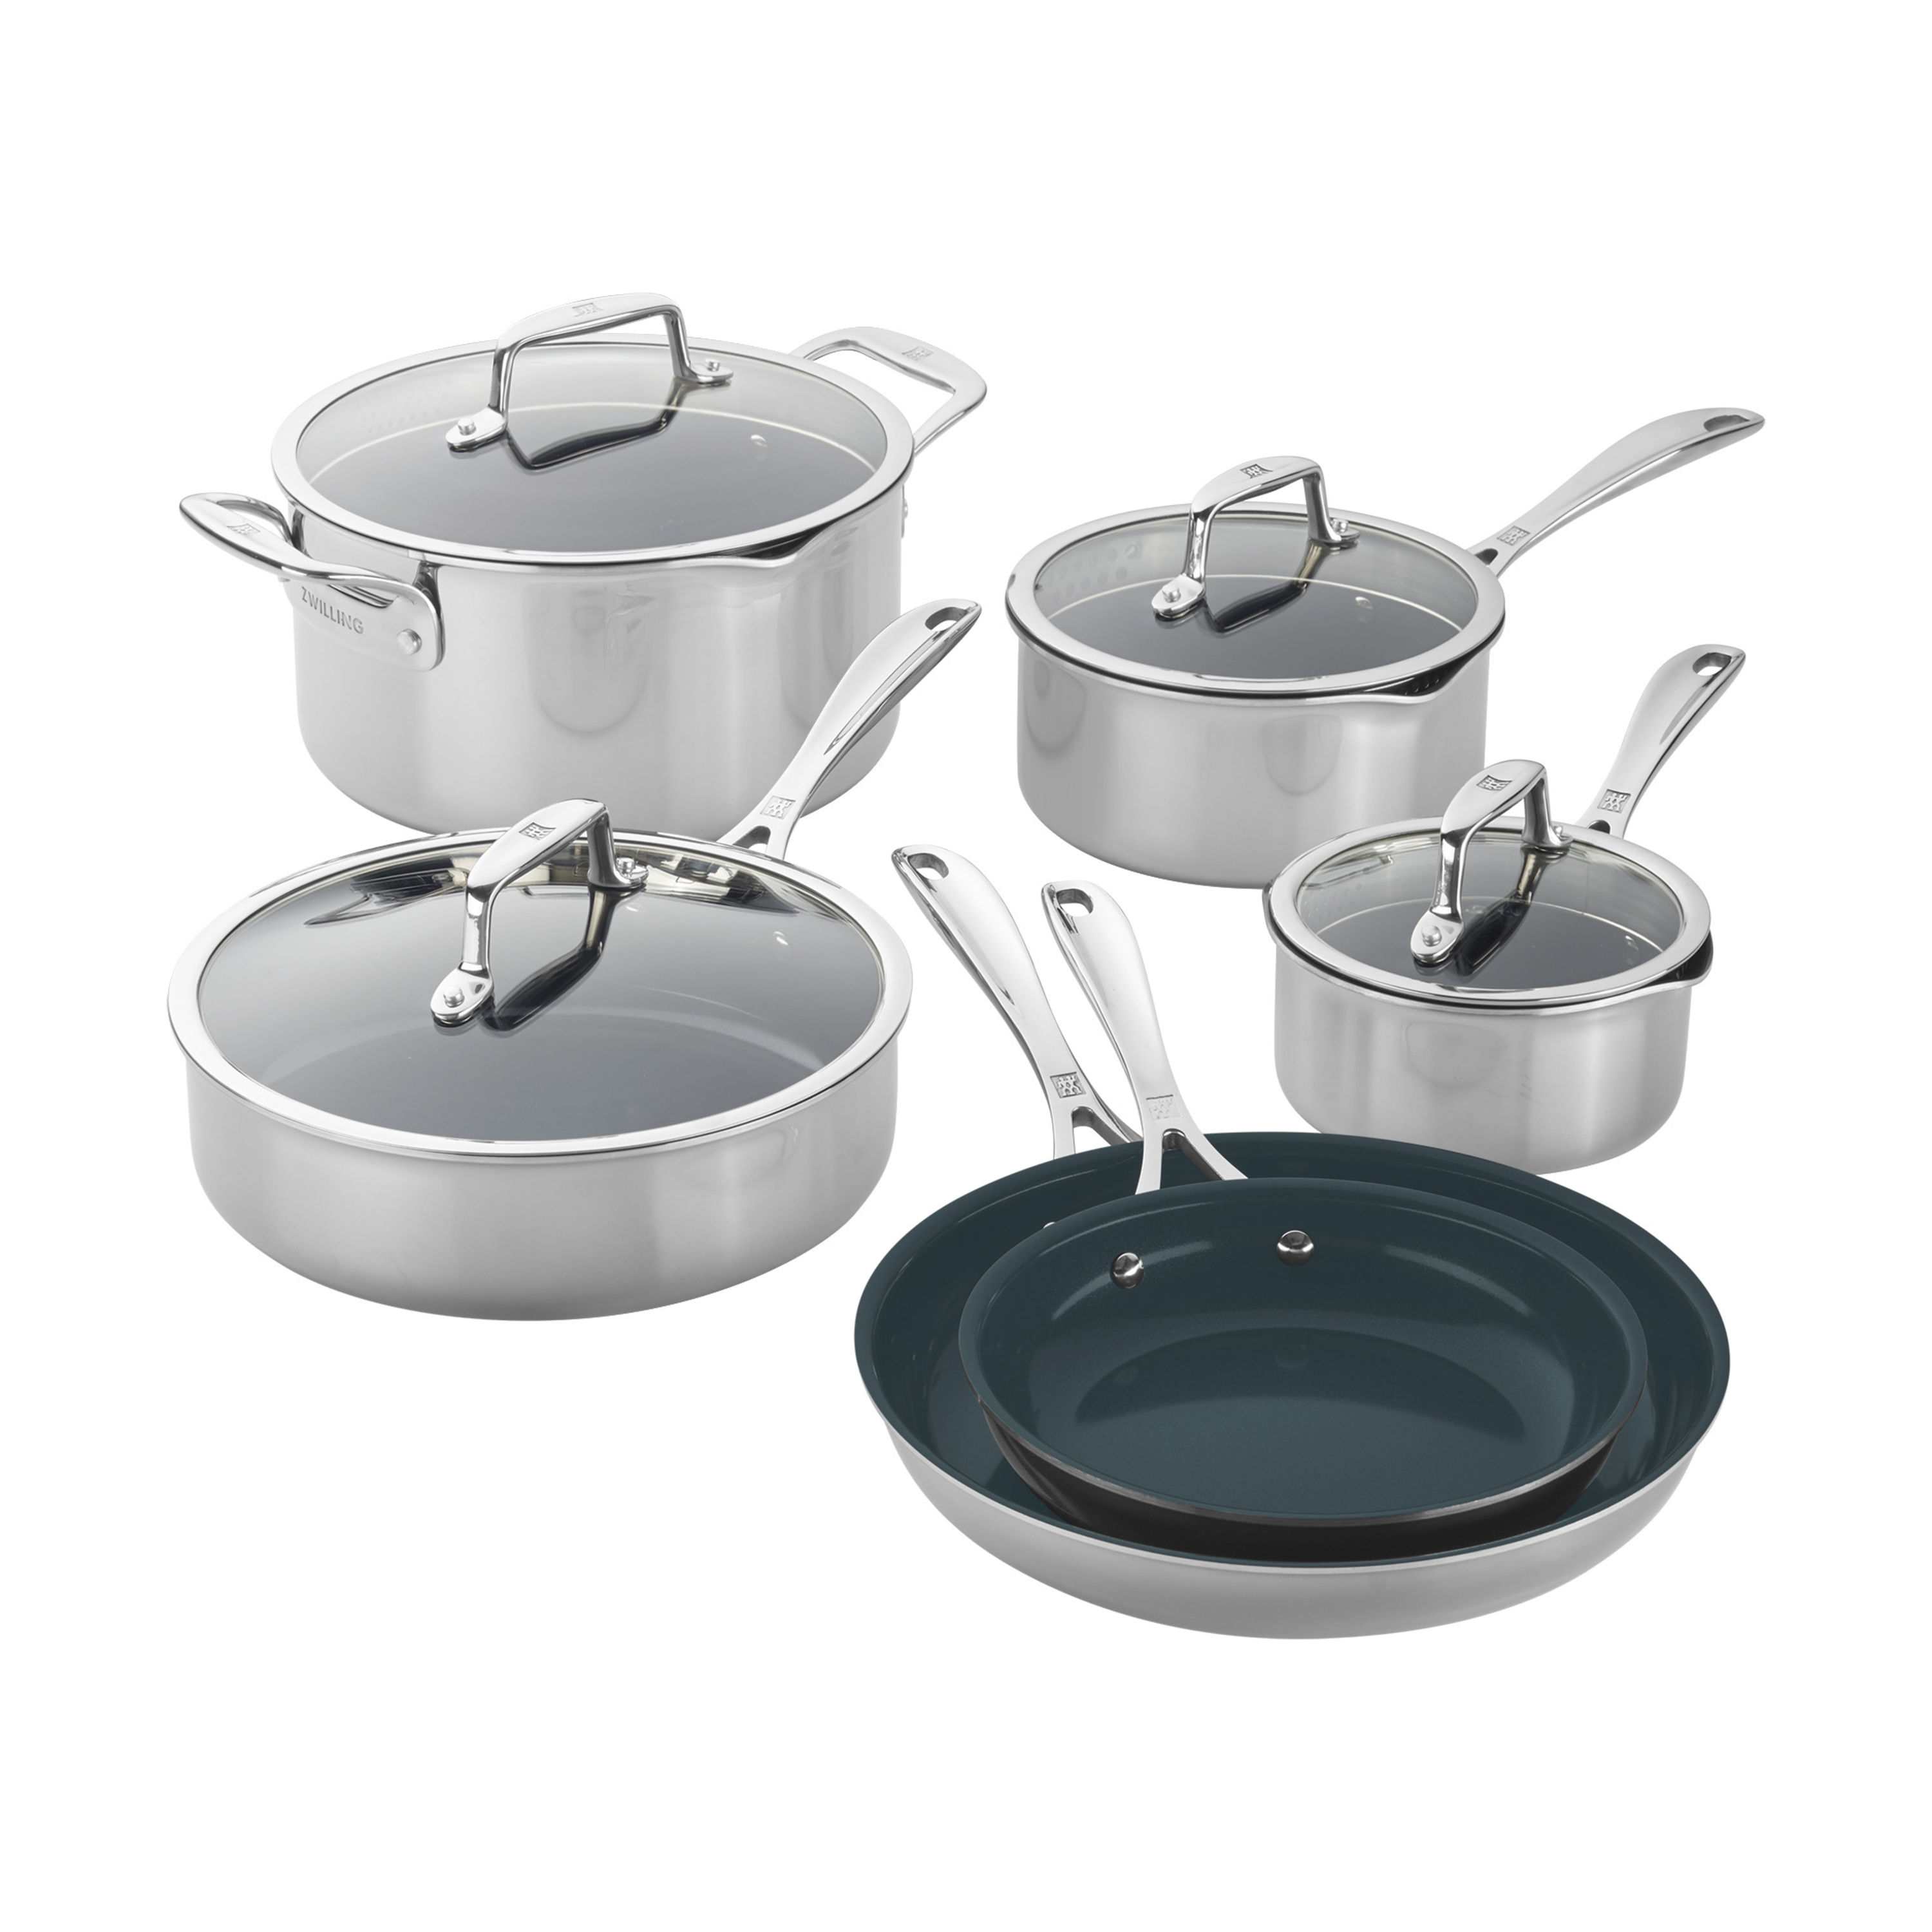 Details about   Non Stick Cookware Set Stainless Steel Kitchen Tools Pots Pans Bowl 10 Pieces 